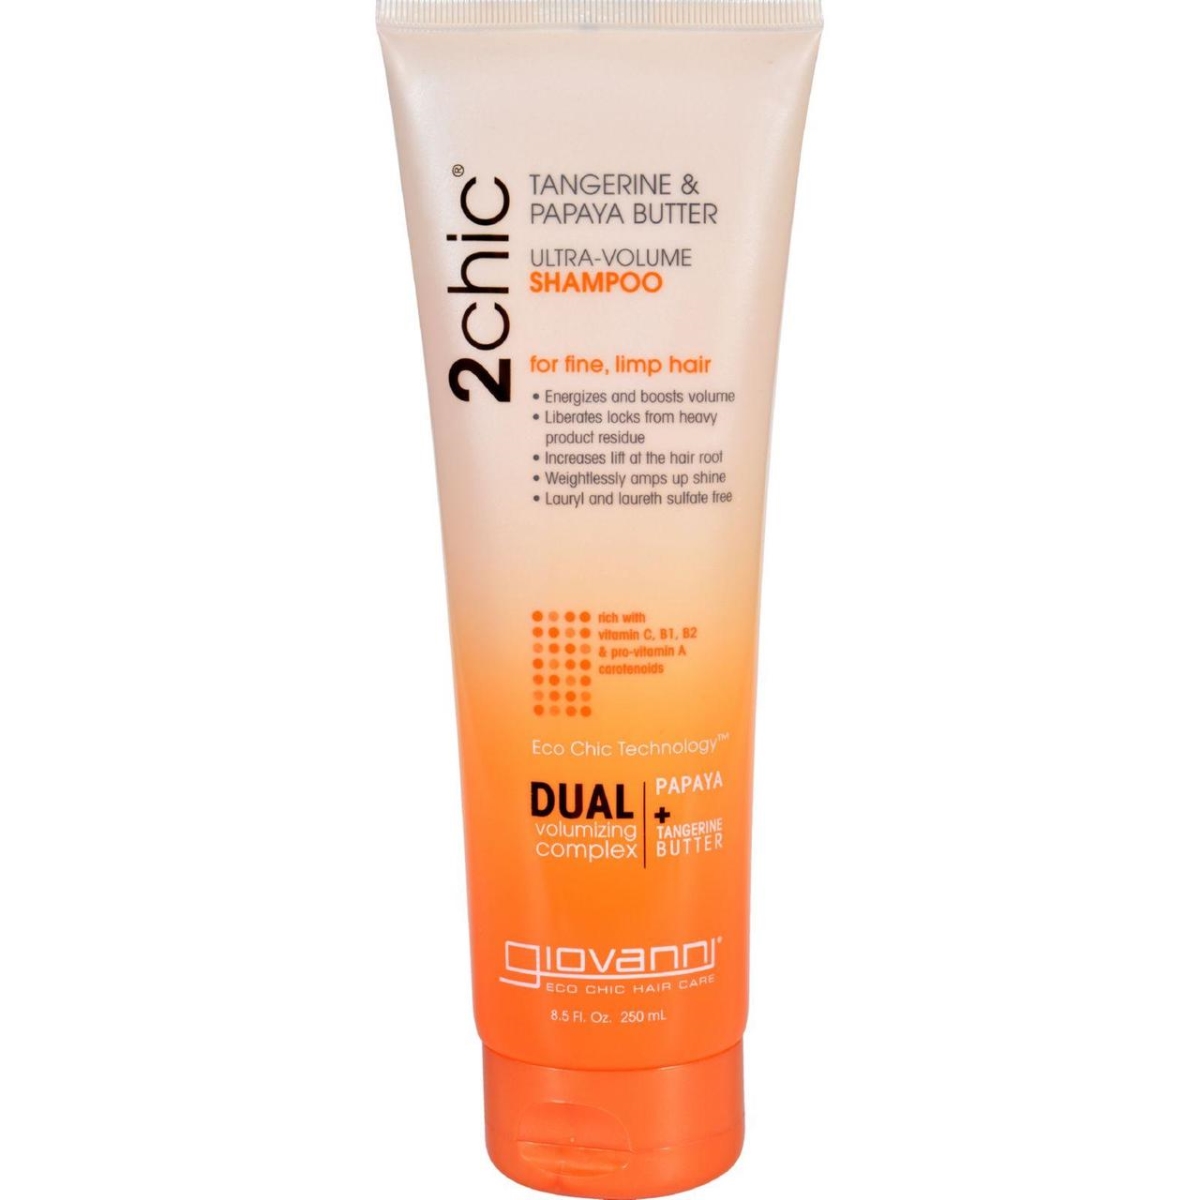 Hg1263722 8.5 Fl Oz 2chic Shampoo, Ultra-volume Tangerine & Papaya Butter